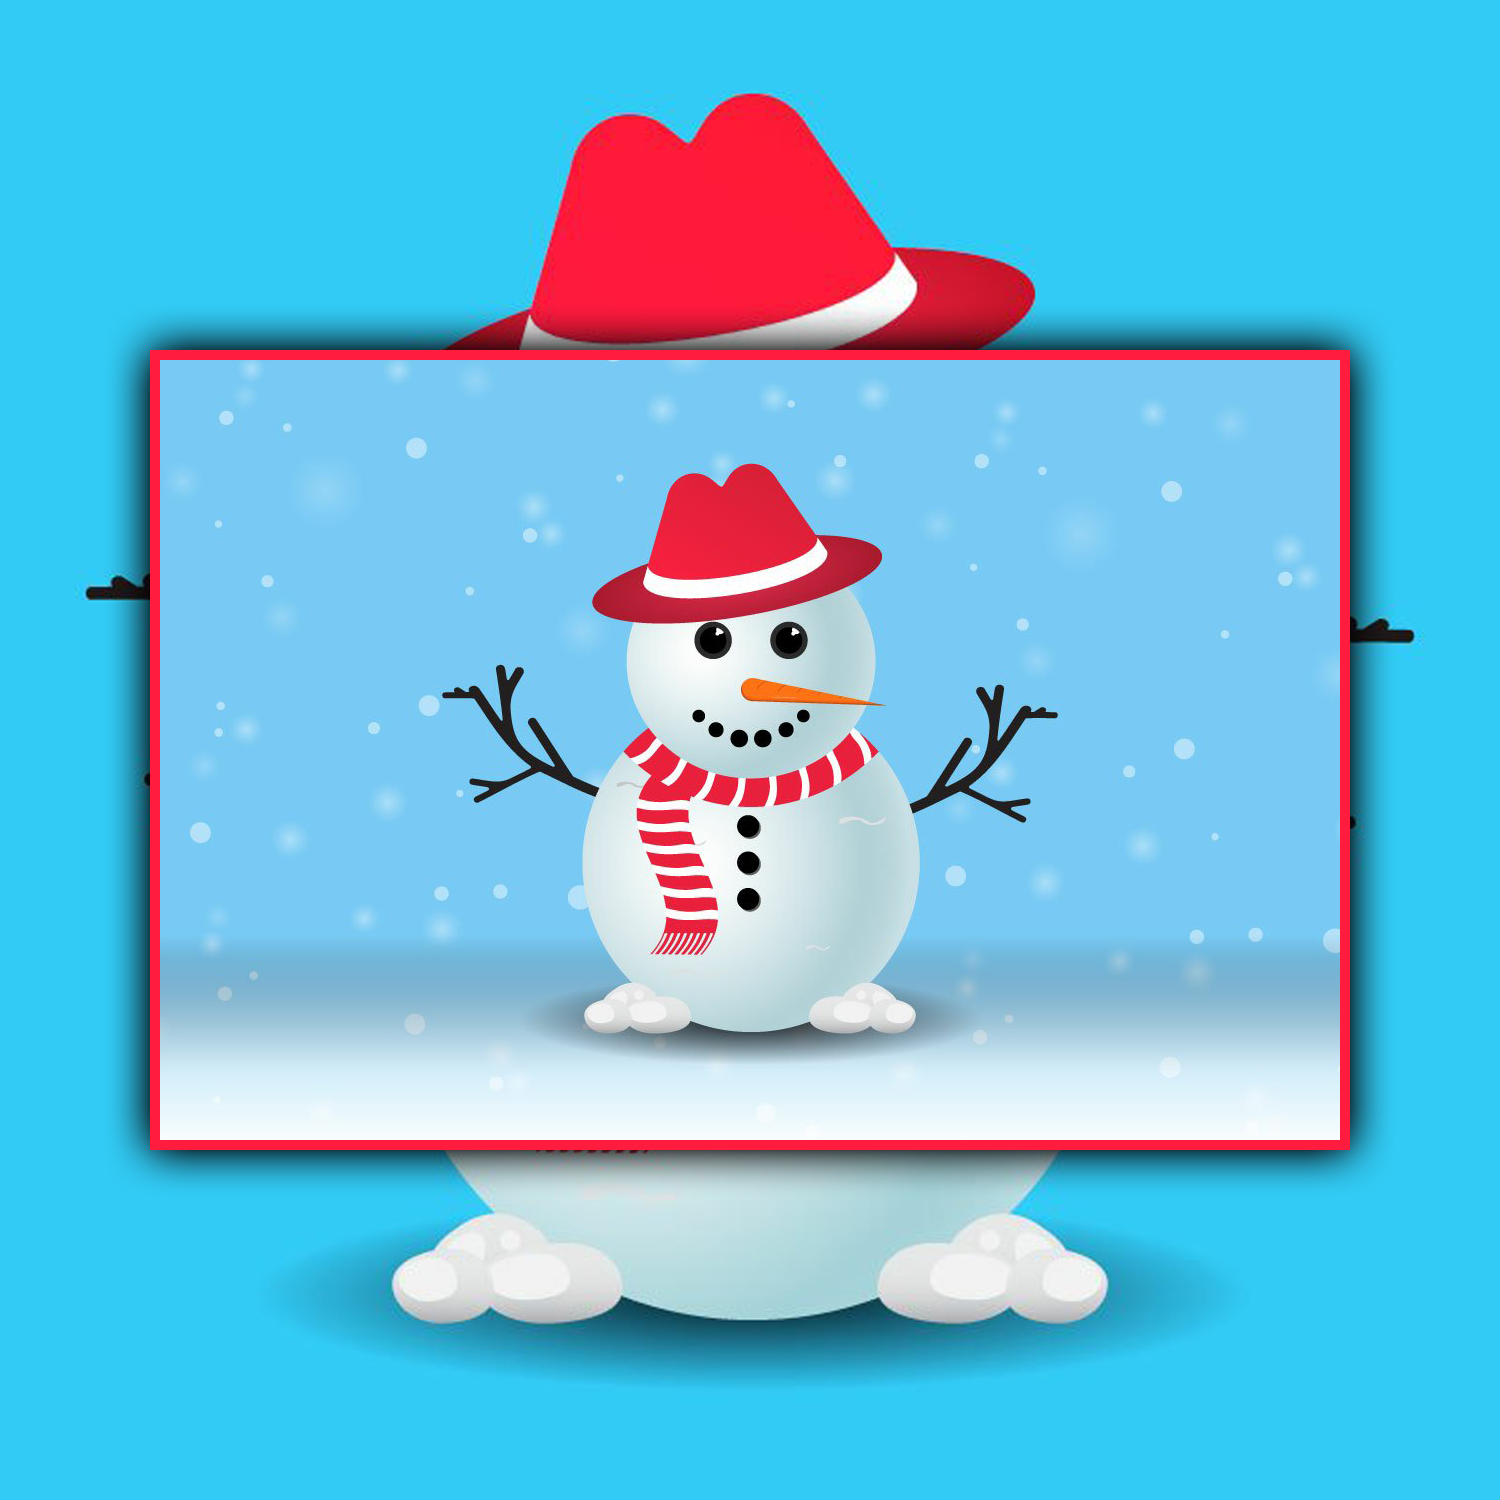 Christmas Cute Snowman with Snowfall cover.